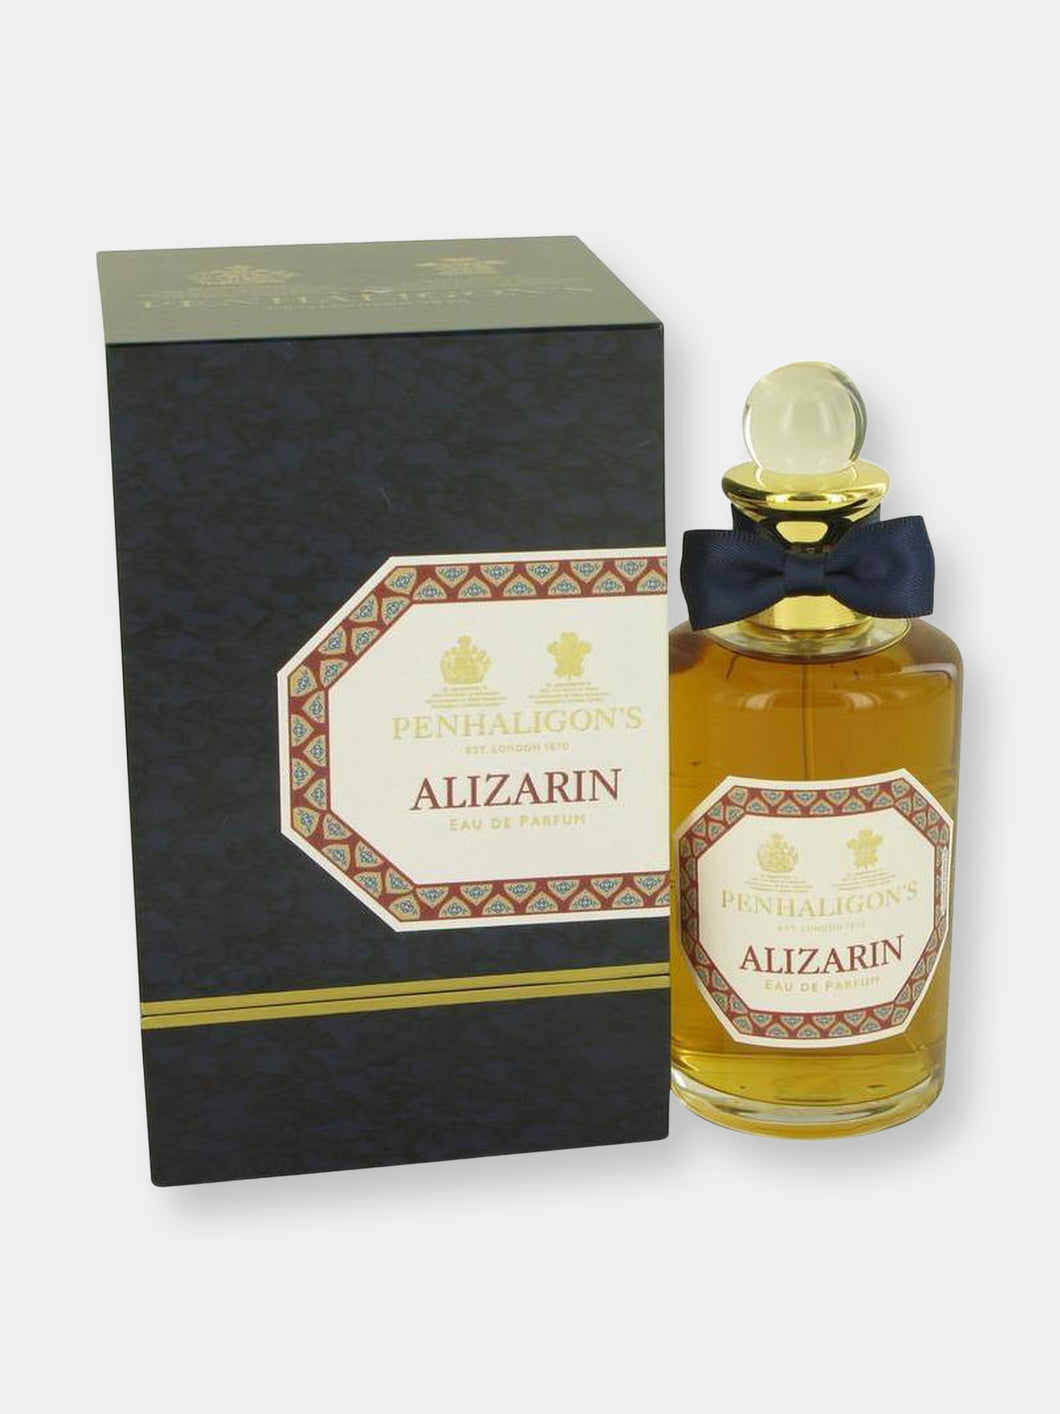 Alizarin Eau De Parfum Spray